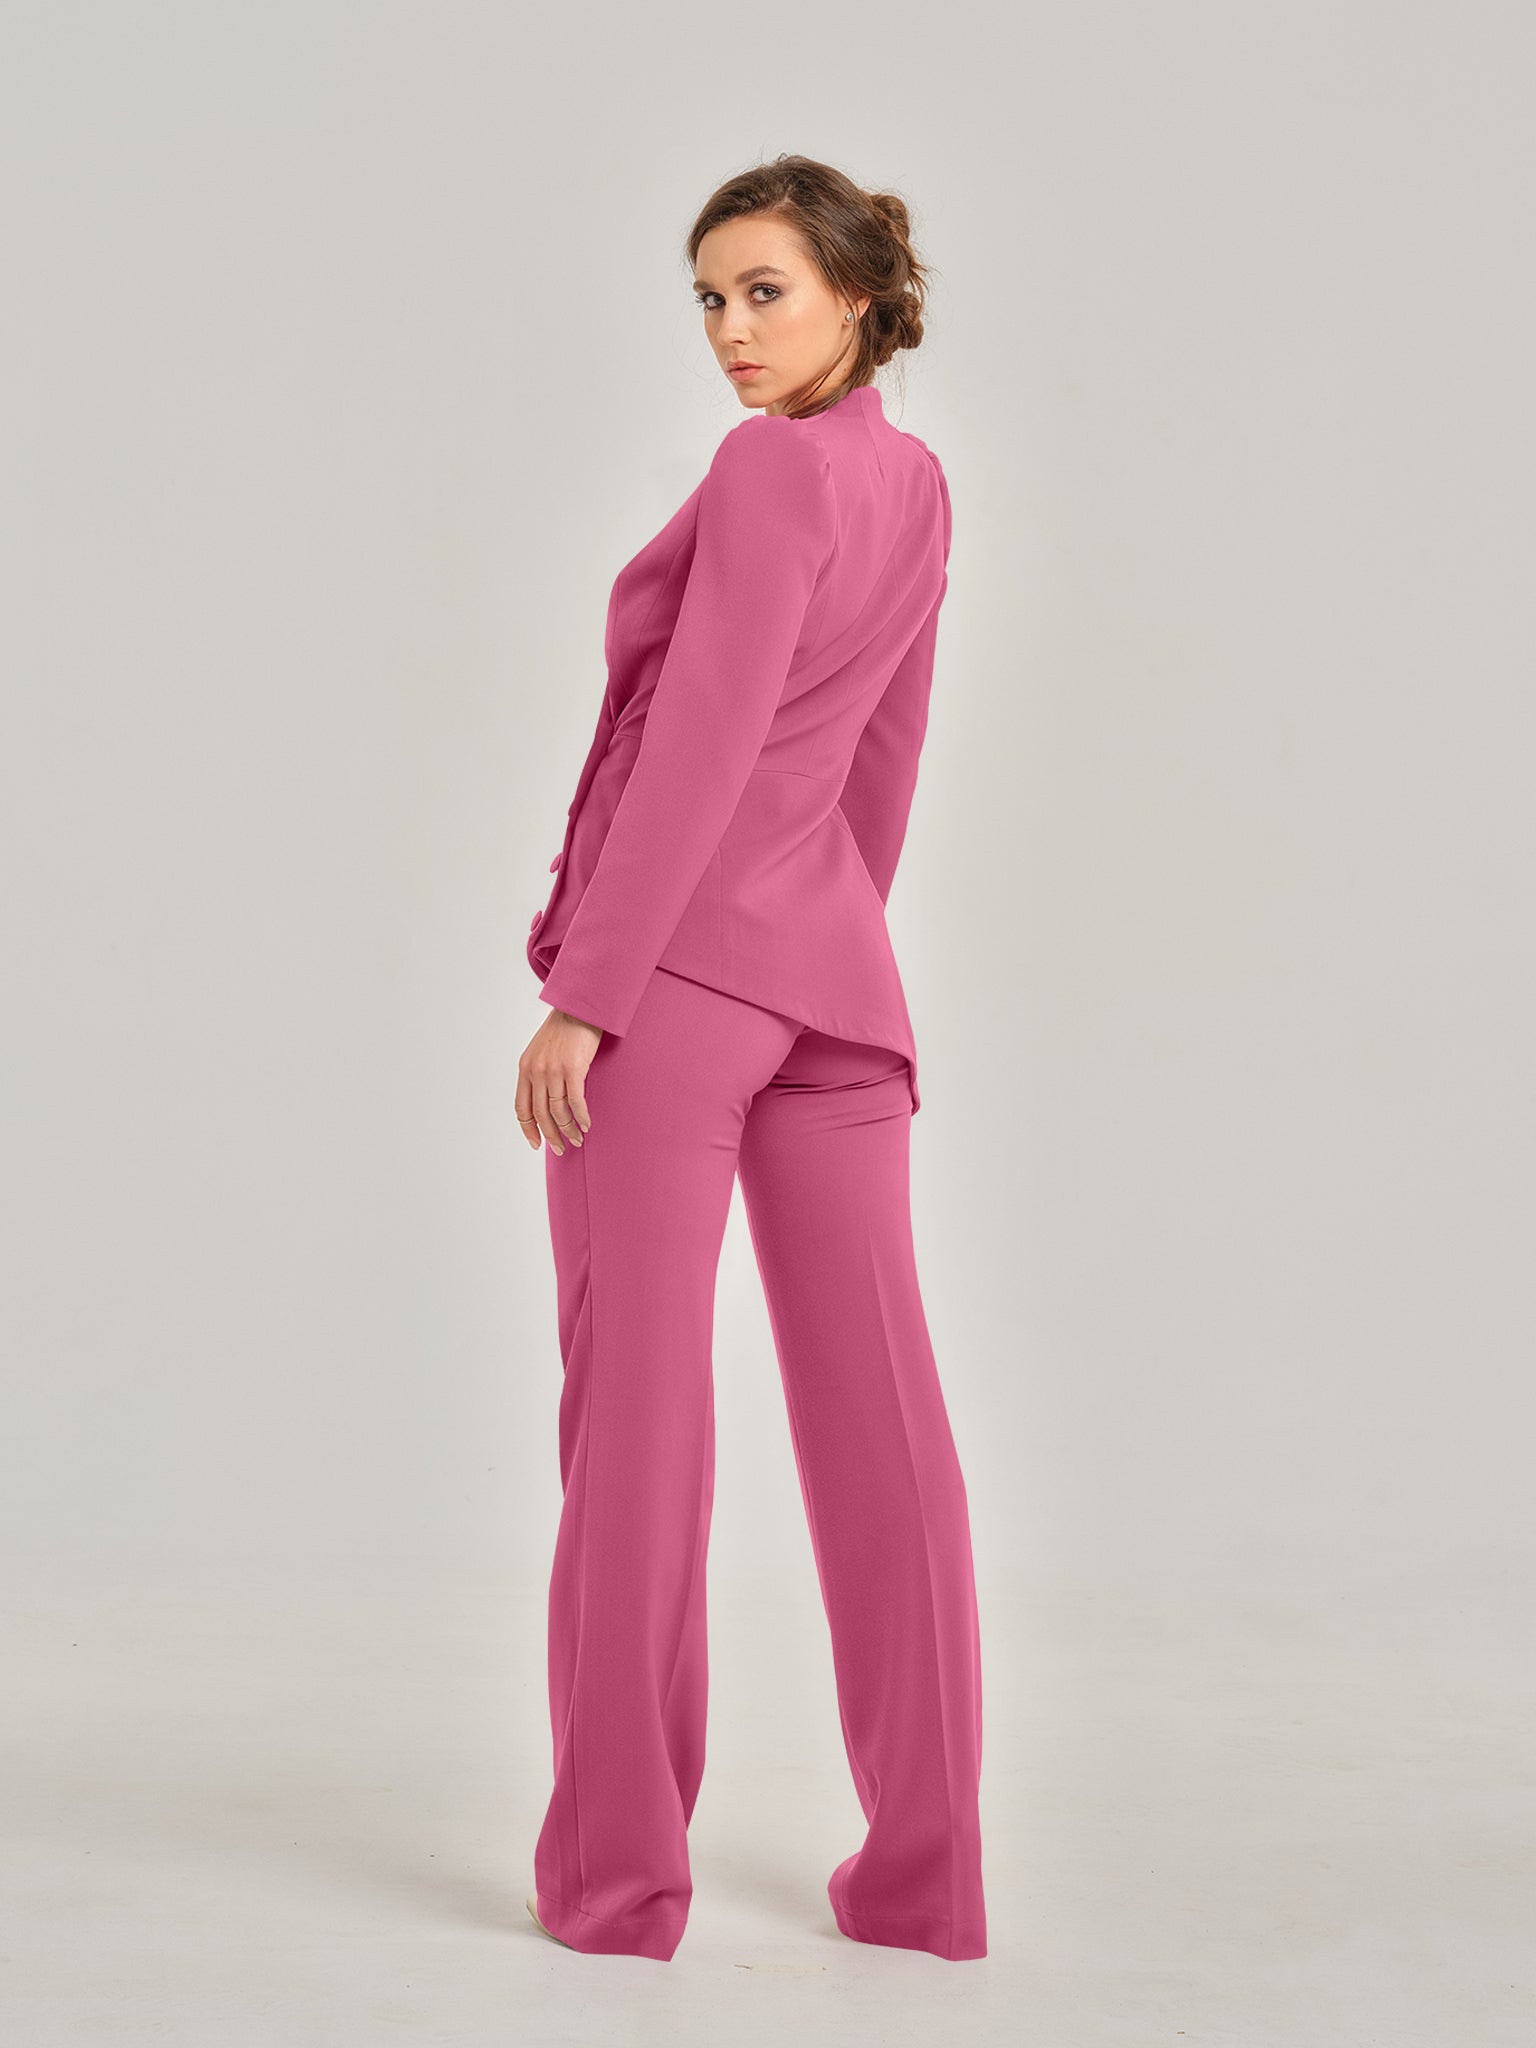 Sweet Desire Timeless Asymmetric Blazer by Tia Dorraine Women's Luxury Fashion Designer Clothing Brand